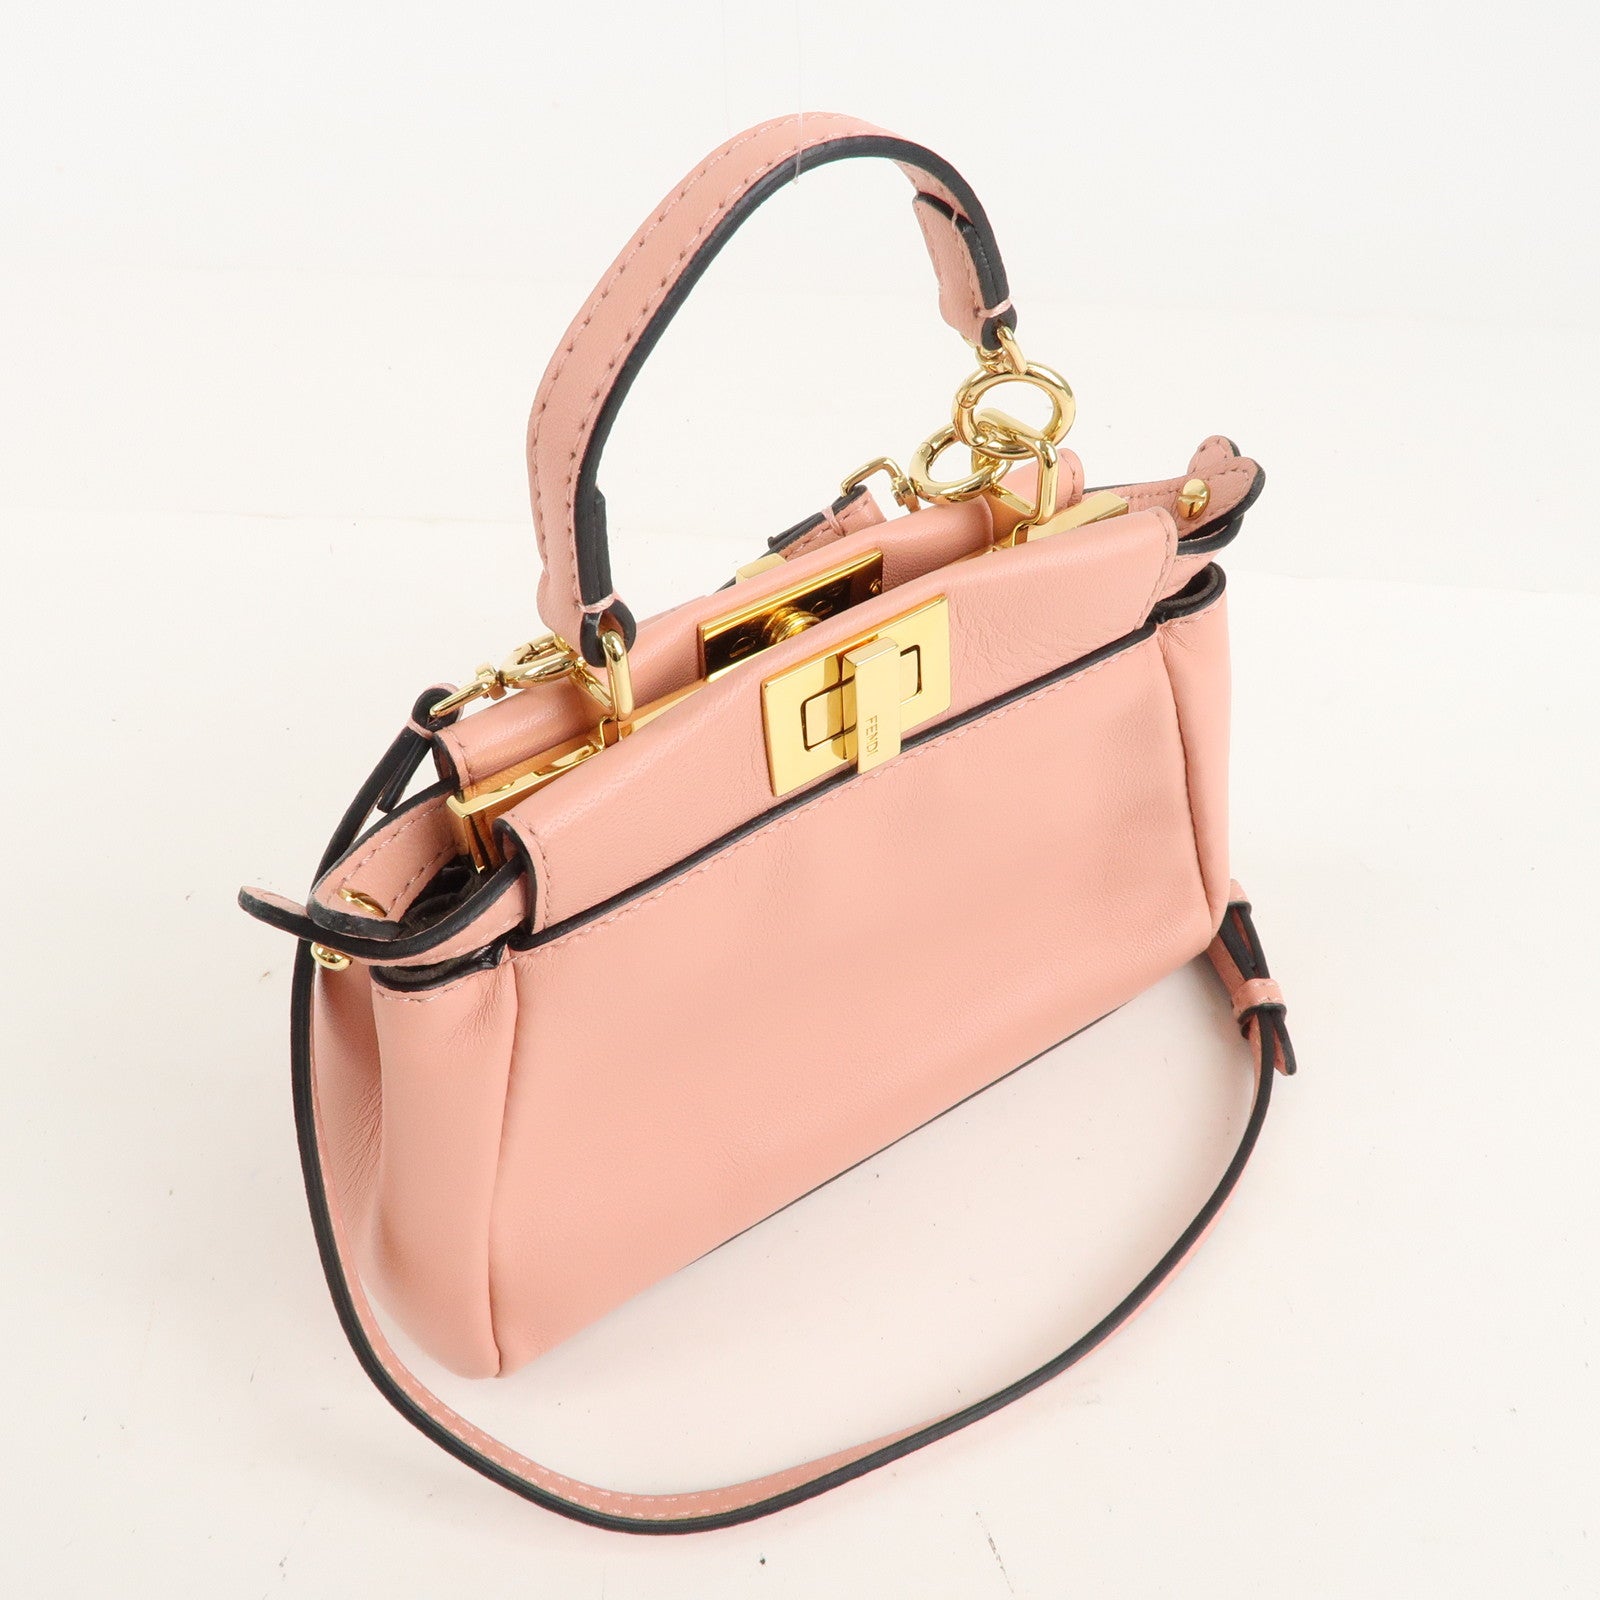 FENDI-Leather-Micro-Peekaboo-2Way-Bag-Hand-Bag-Pink-8M0355